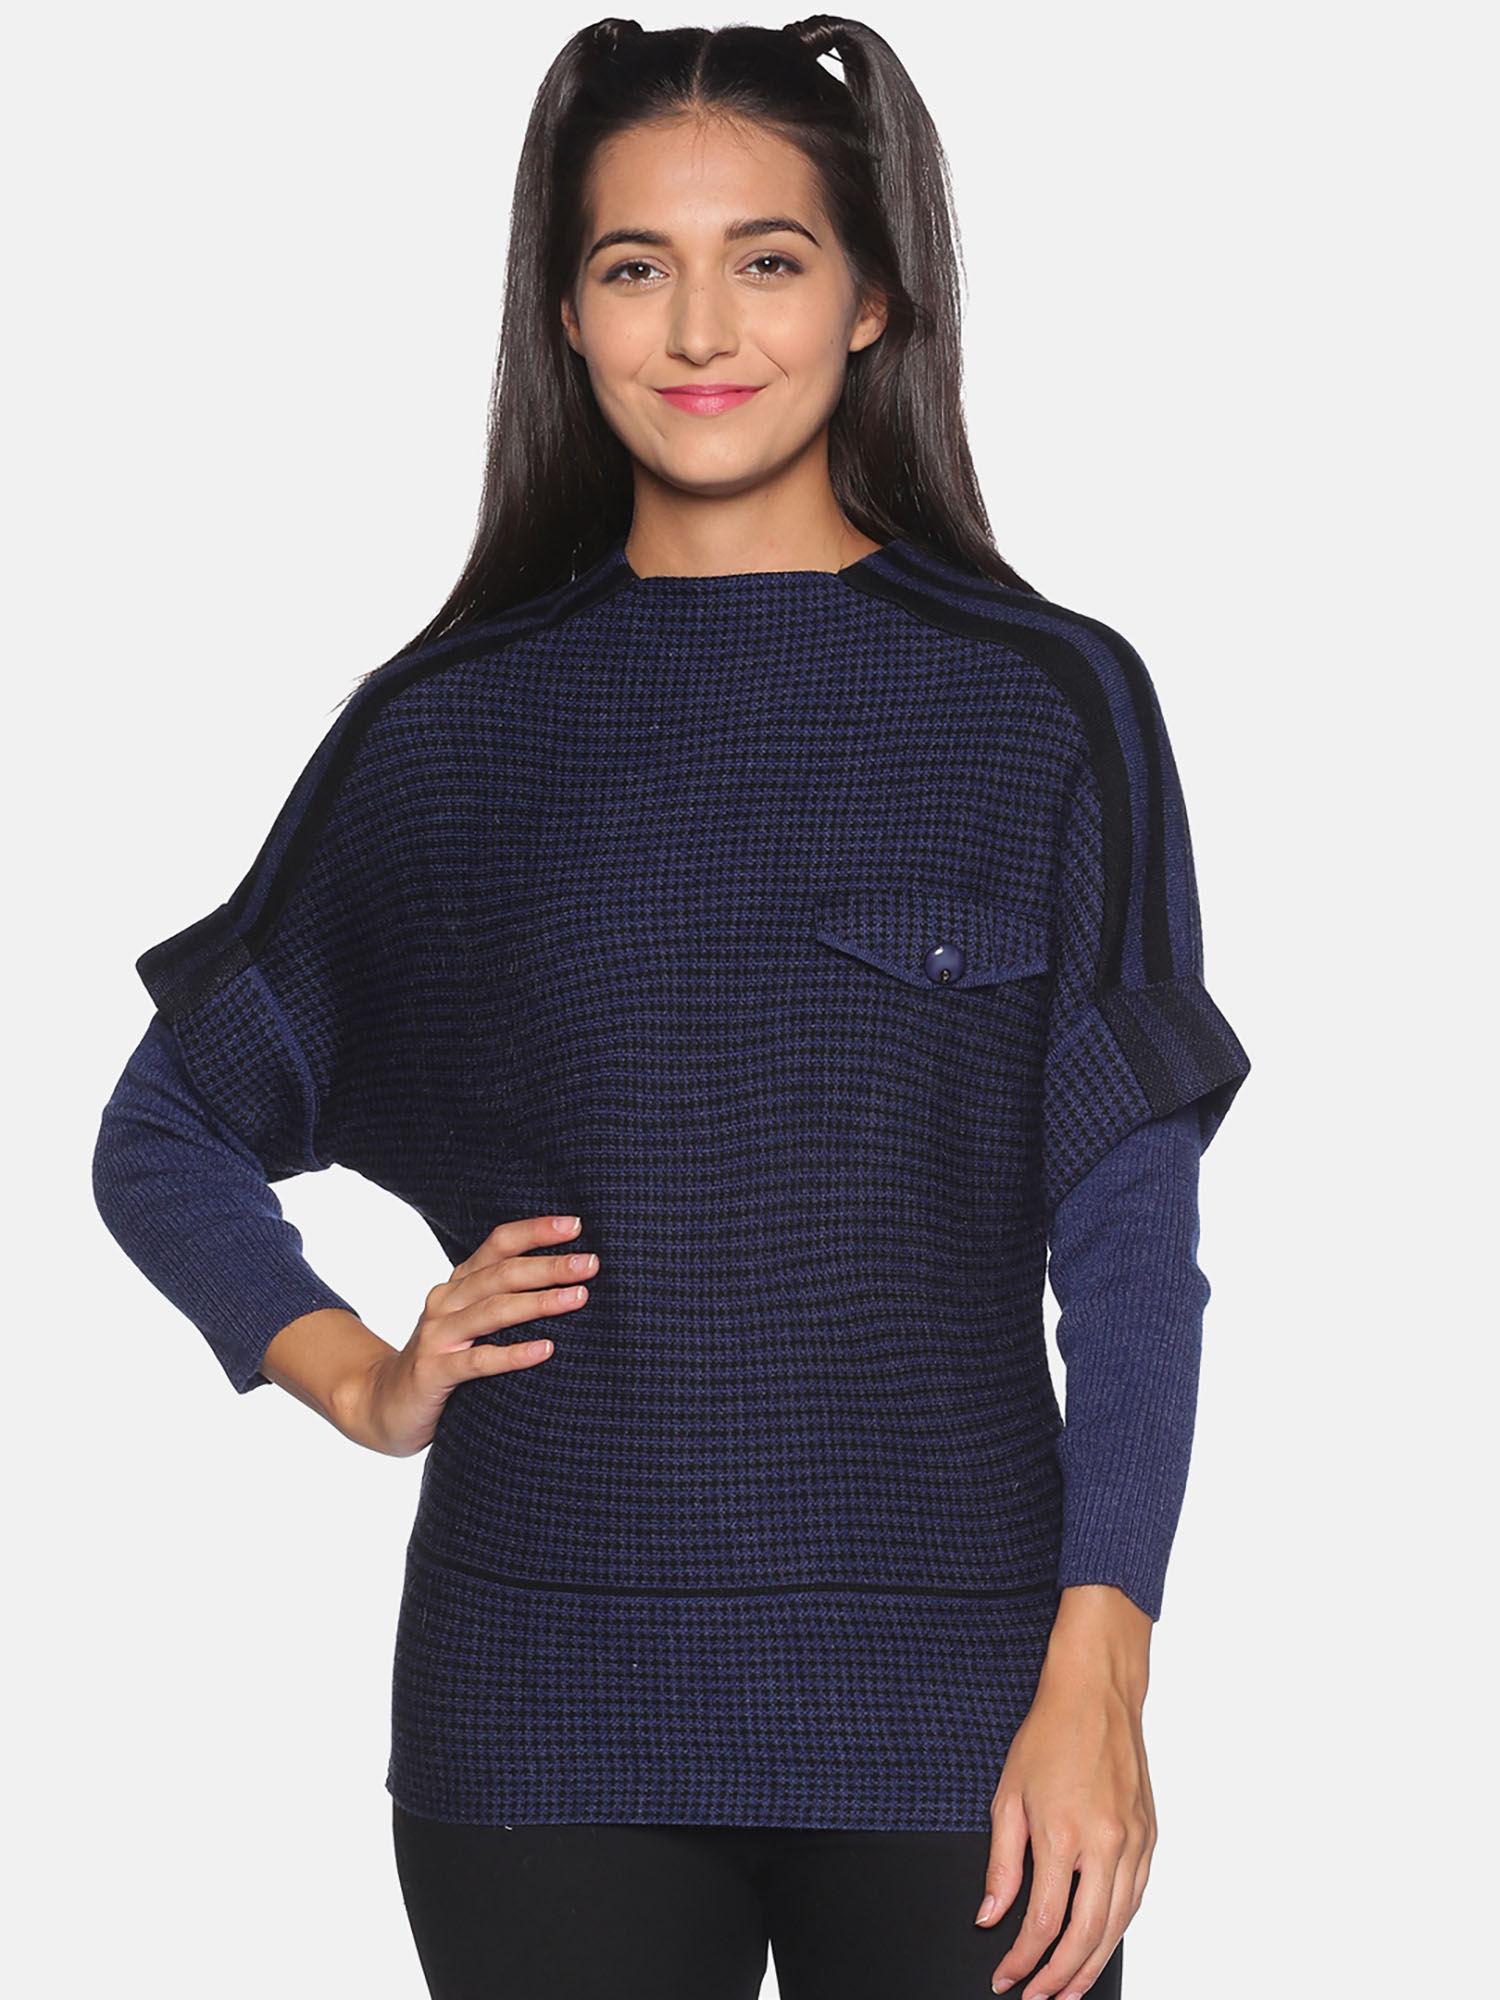 women-navy-blue-color-sweater